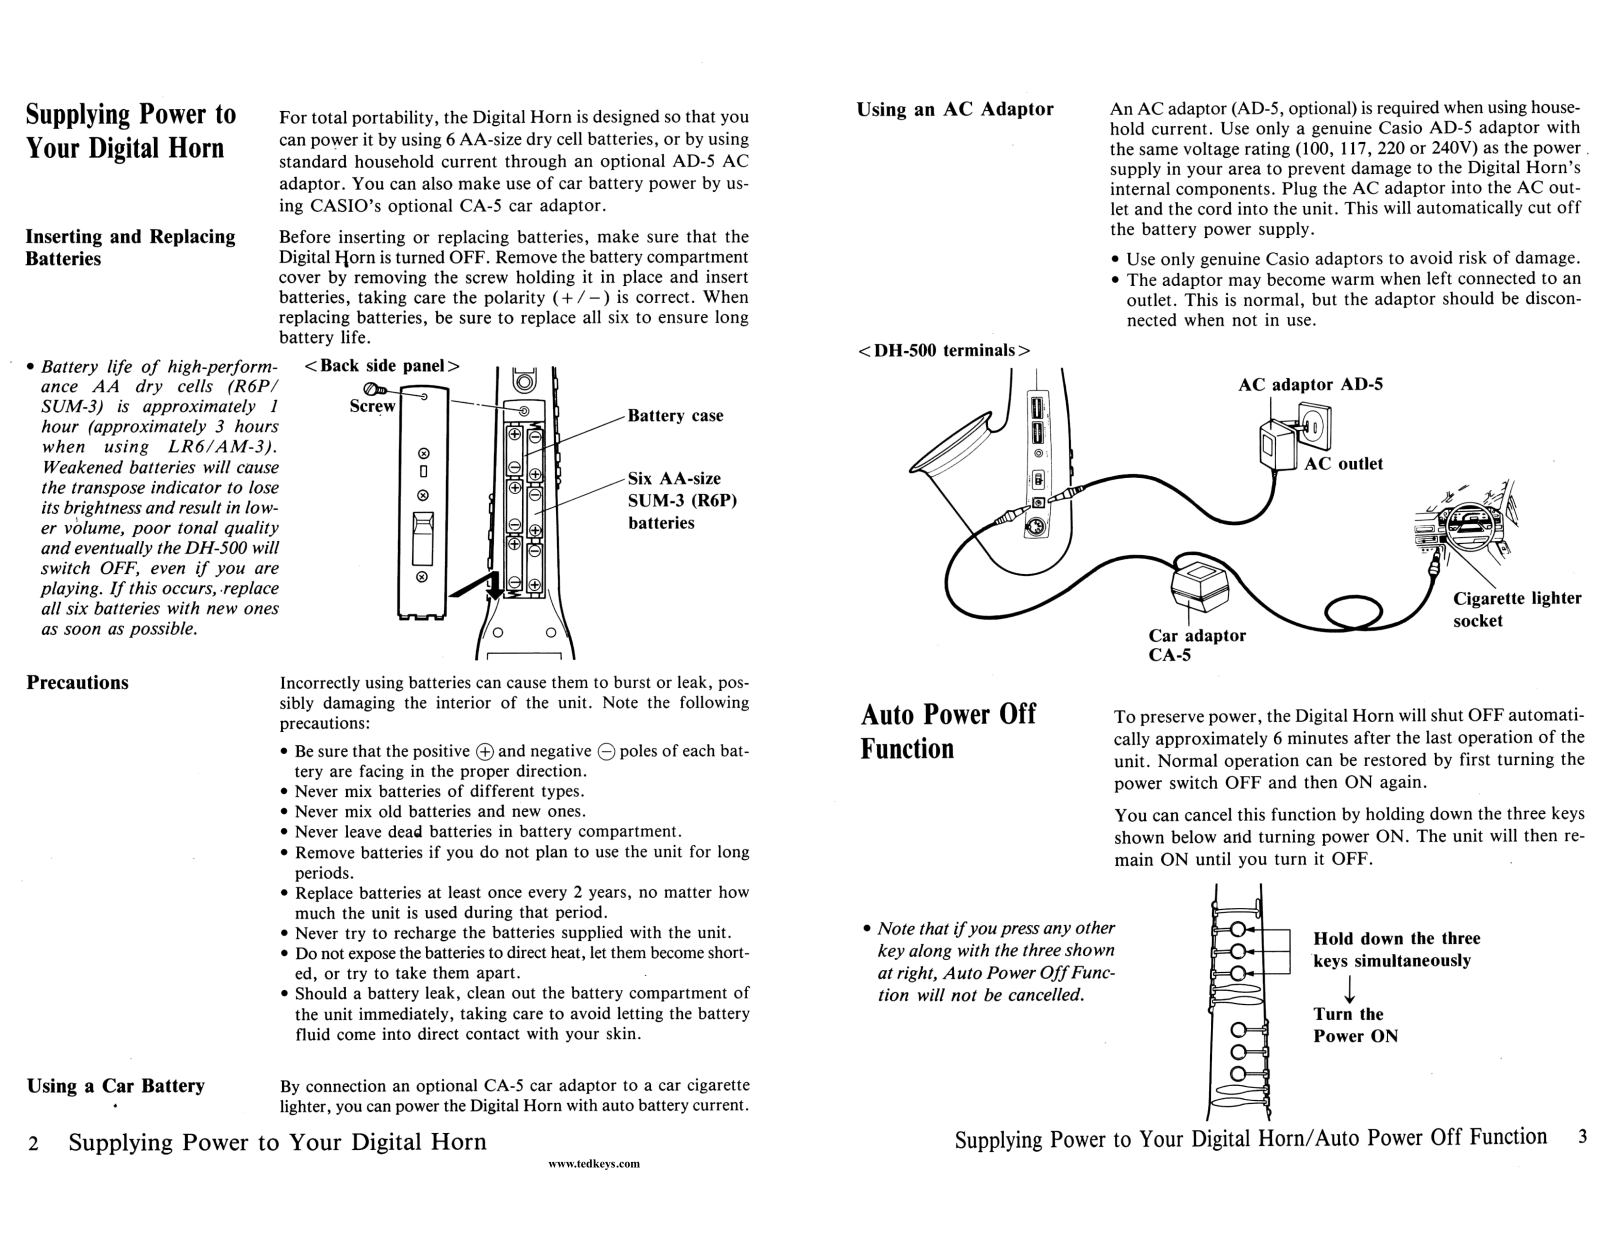 Casio DH-500 User Manual